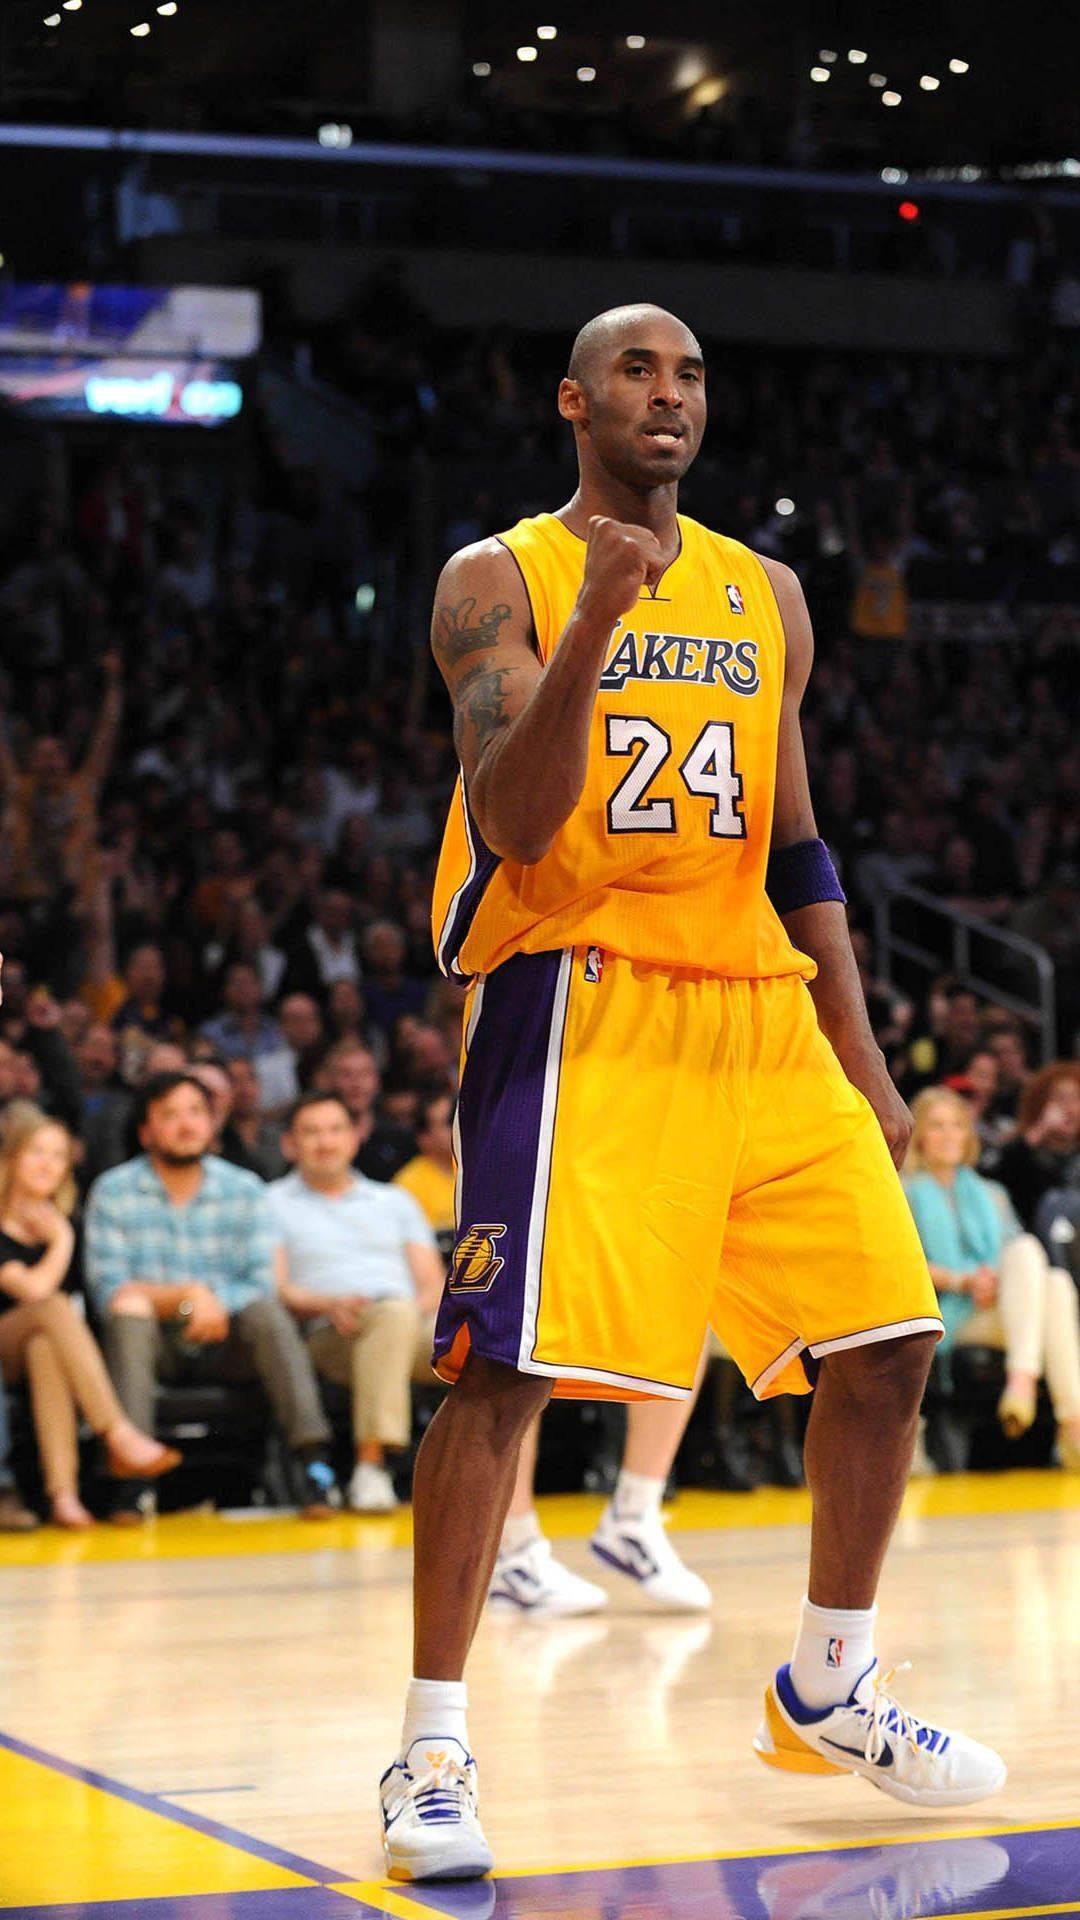 Lakerskobe Bryant Iphone: Lakers Kobe Bryant Para Iphone Fondo de pantalla